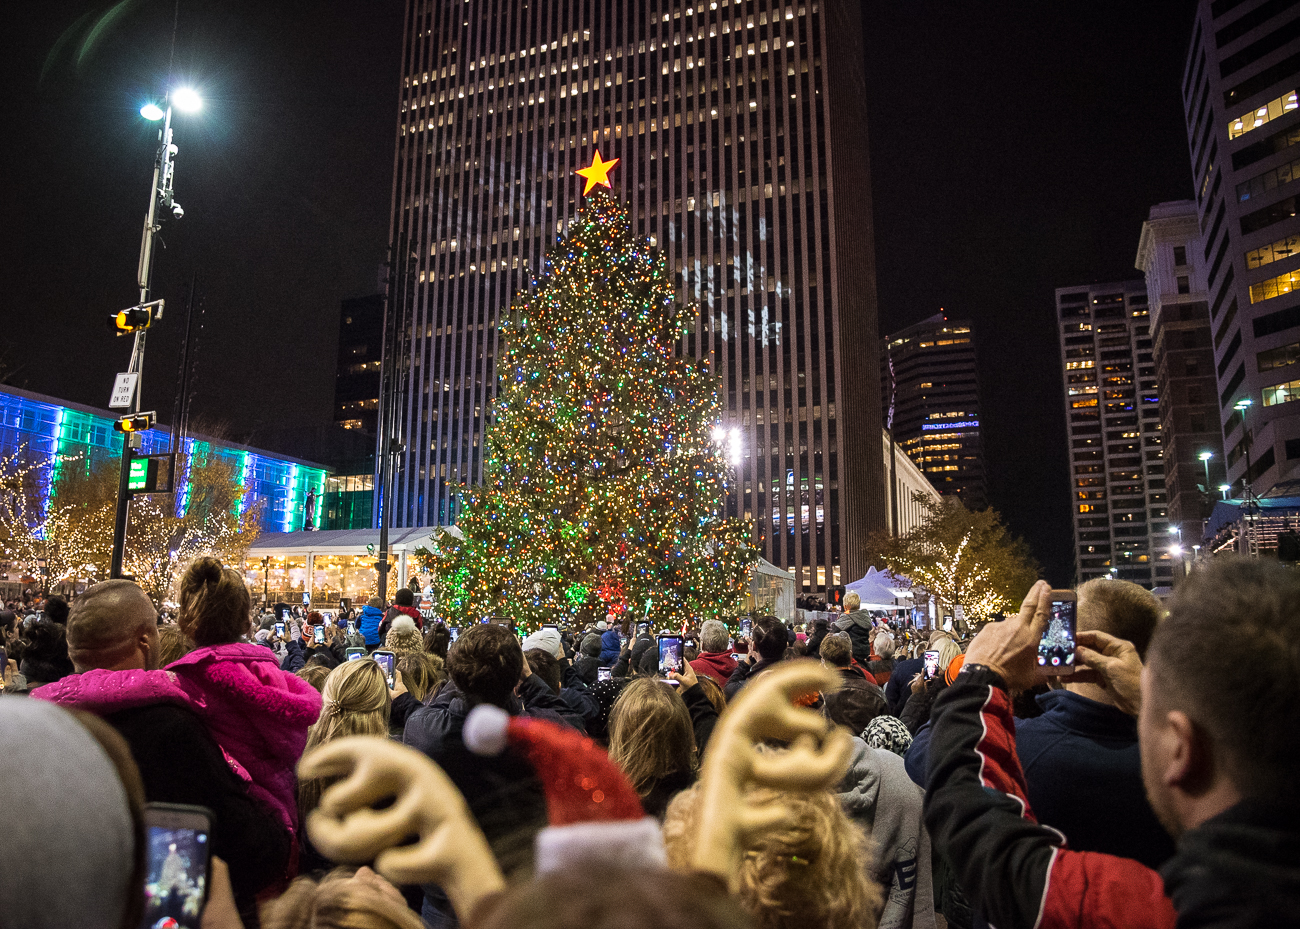 Fountain Square's Massive Christmas Tree Was Lit Last Night